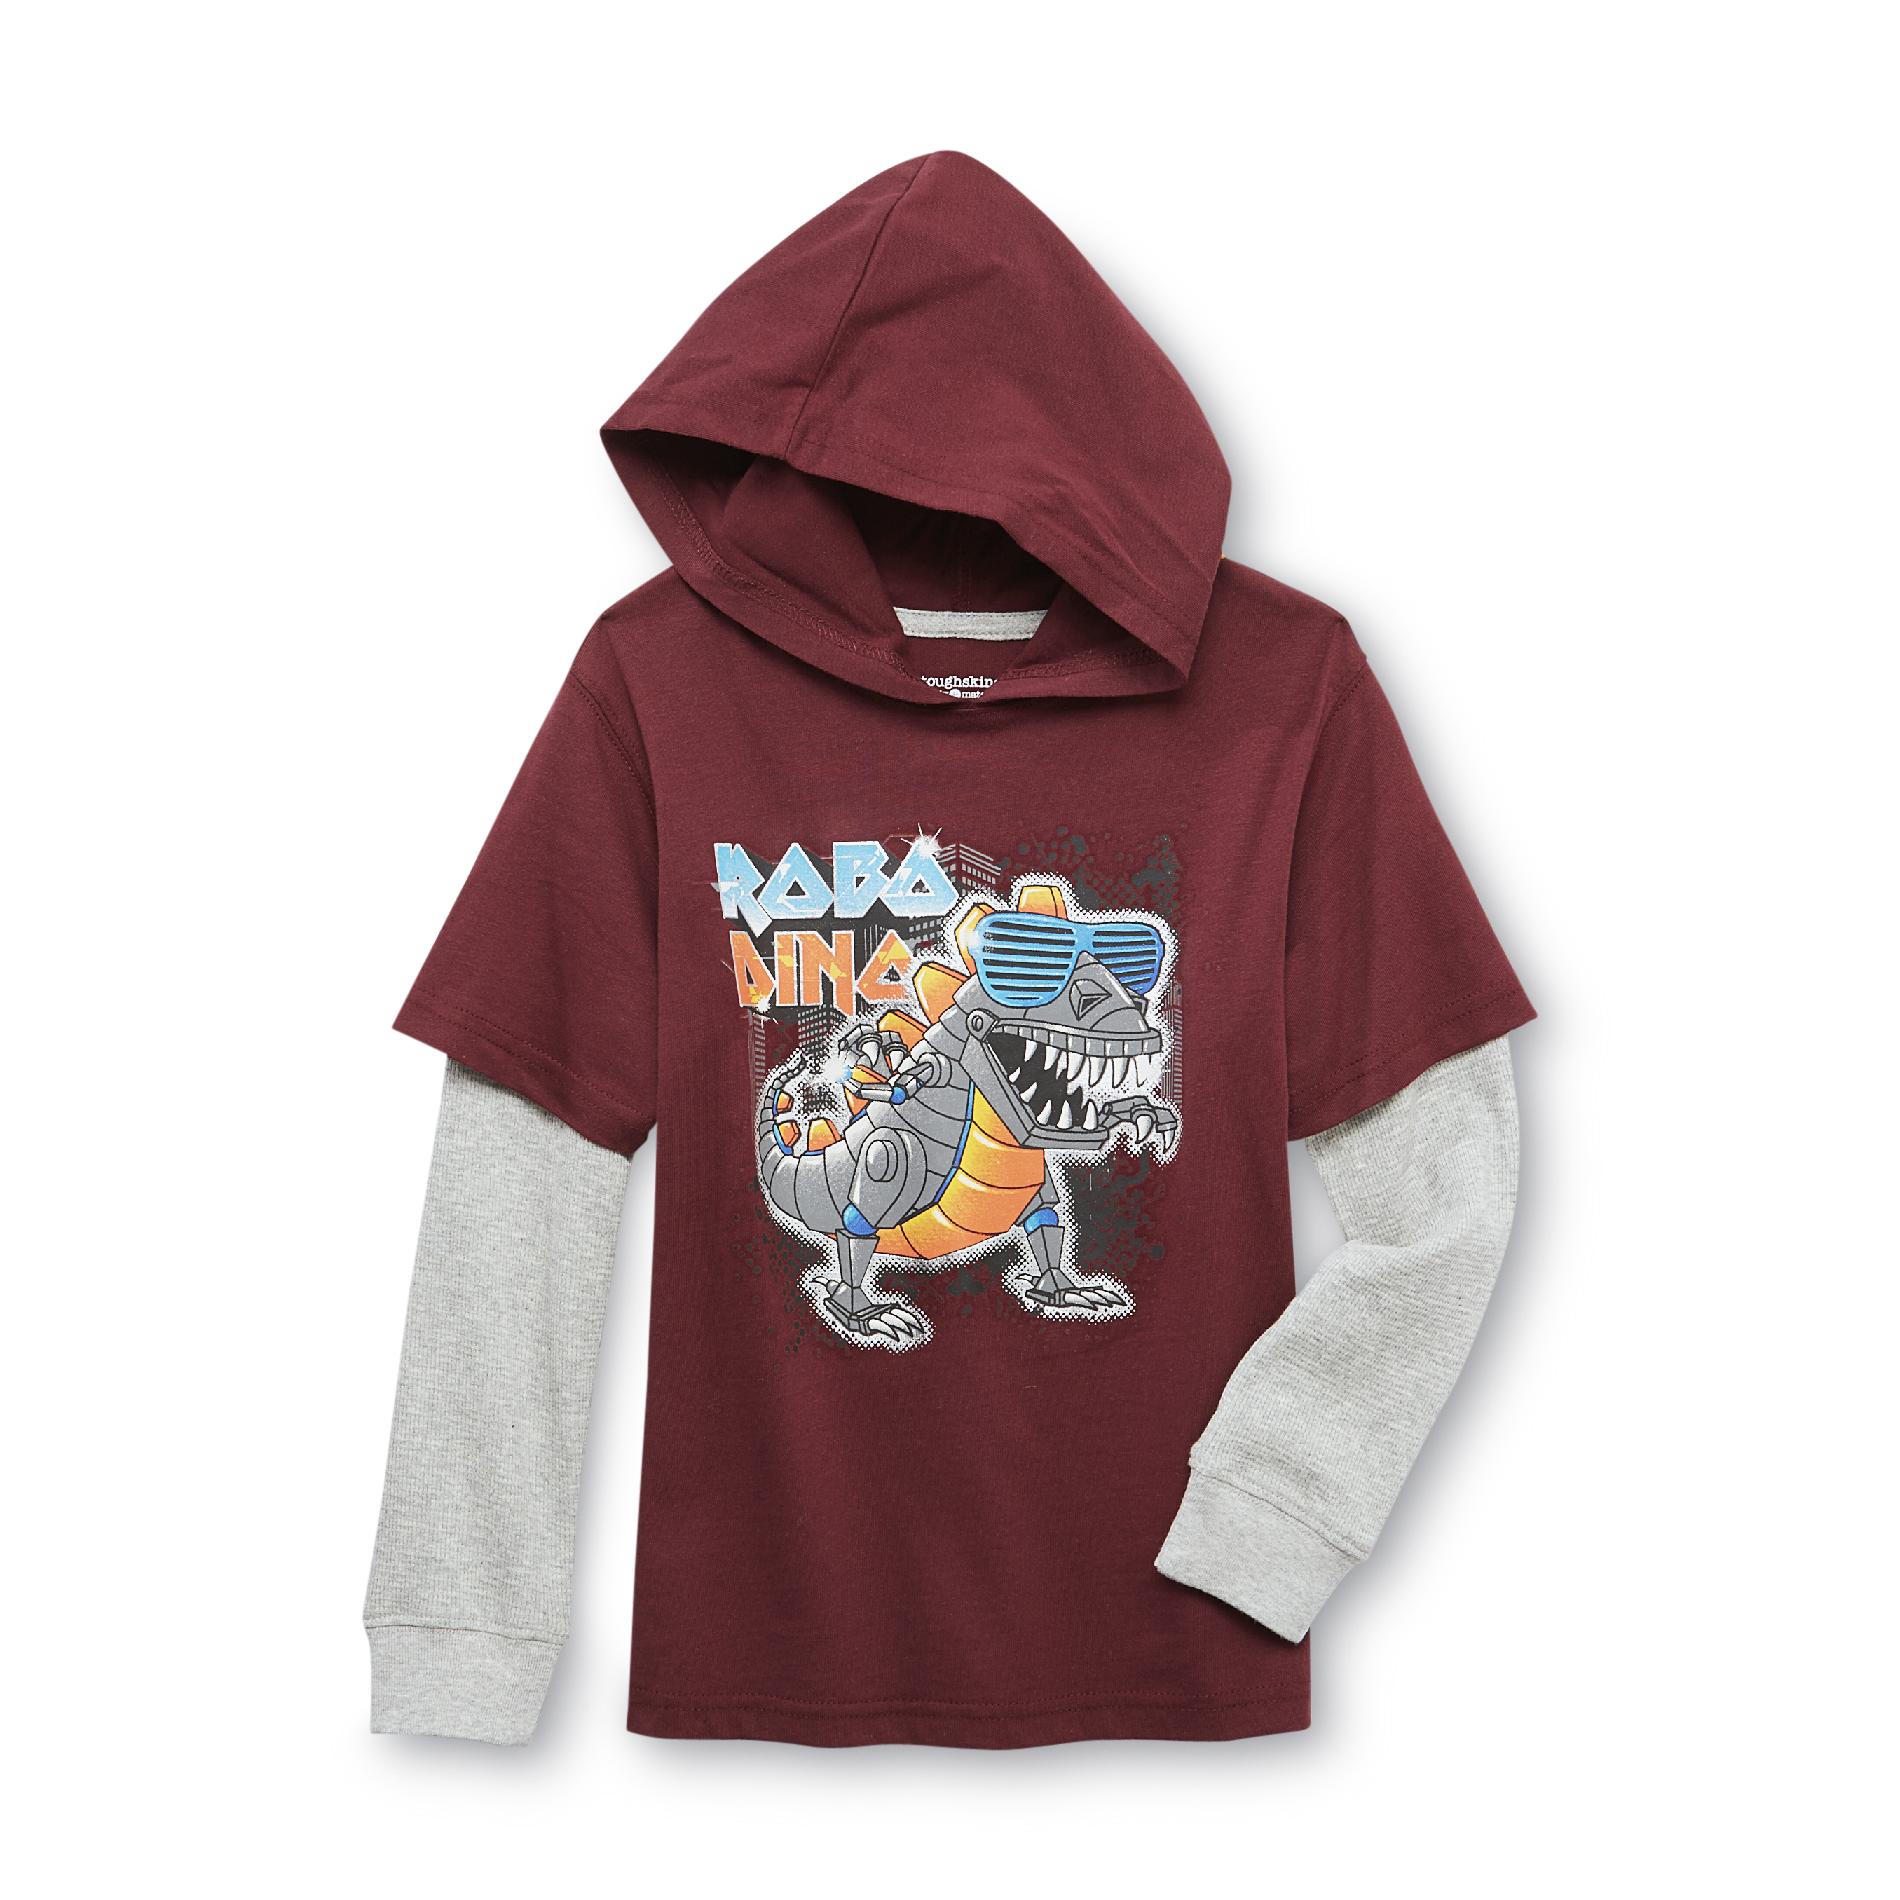 Toughskins Boy's Hooded Graphic T-Shirt - Robo Dino